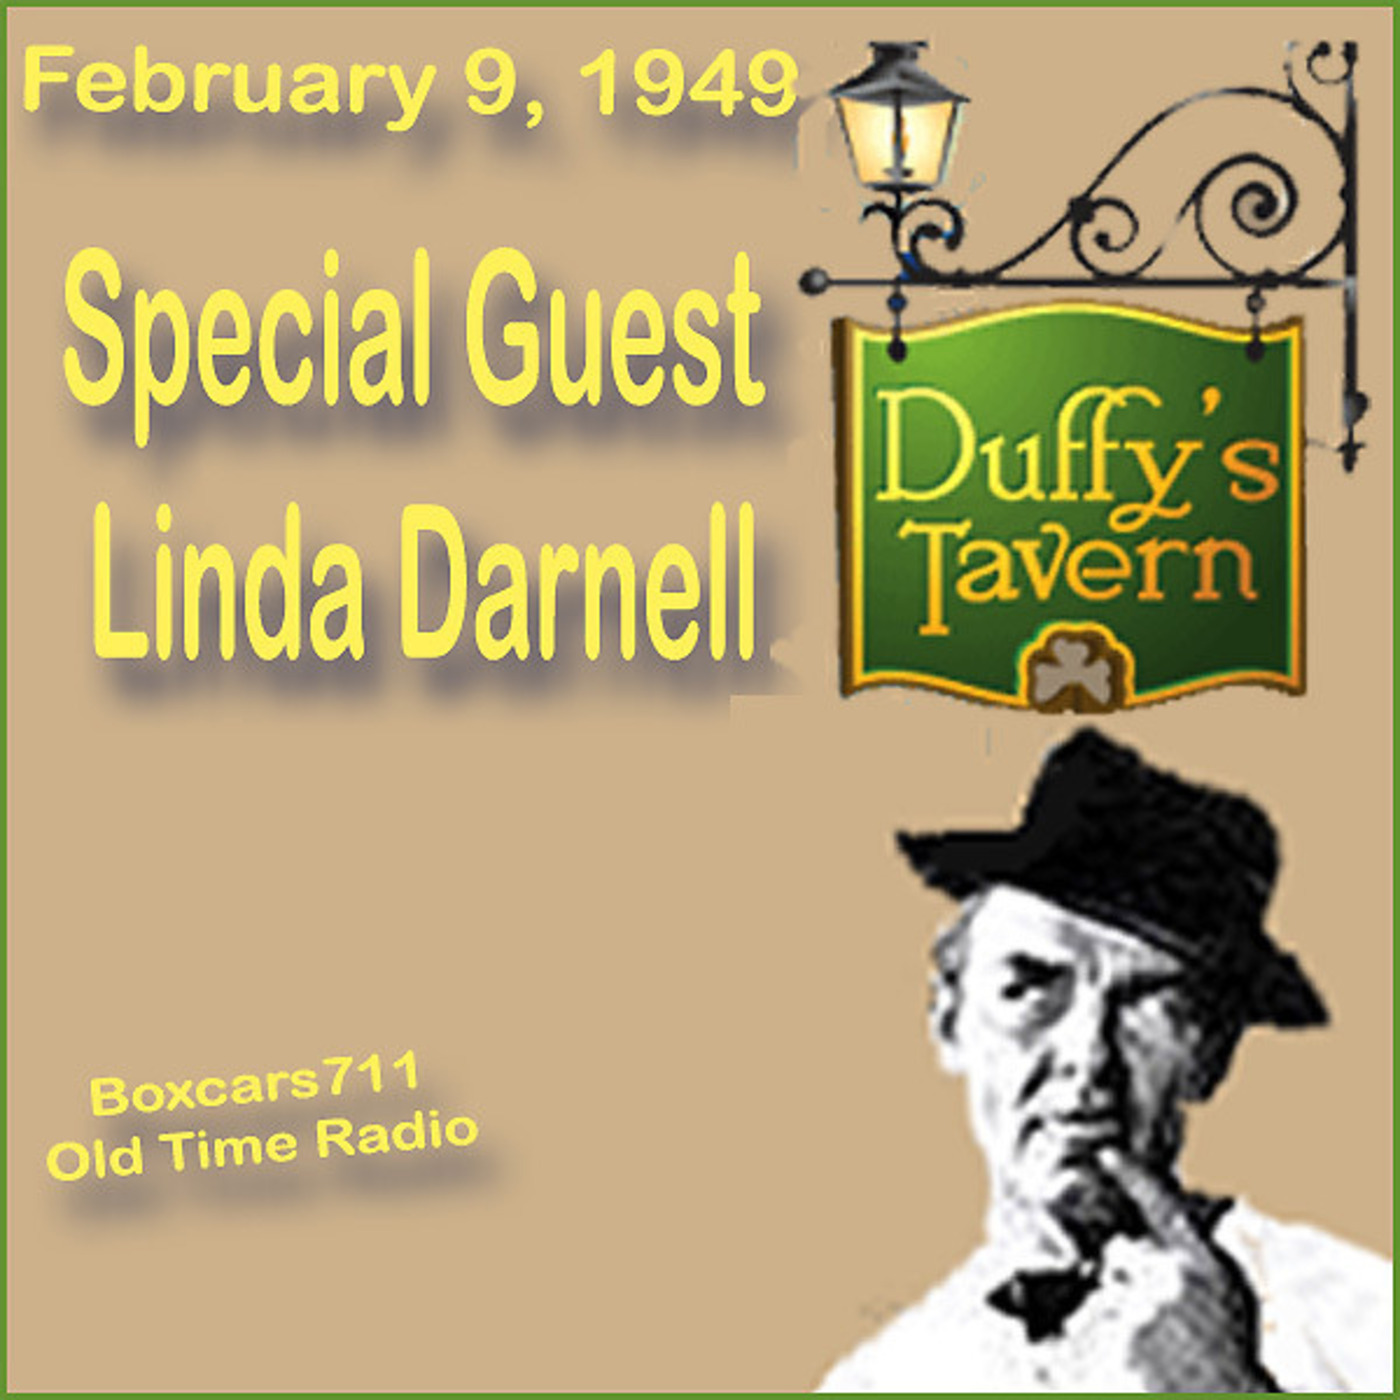 Episode 9447: Duffy's Tavern - 